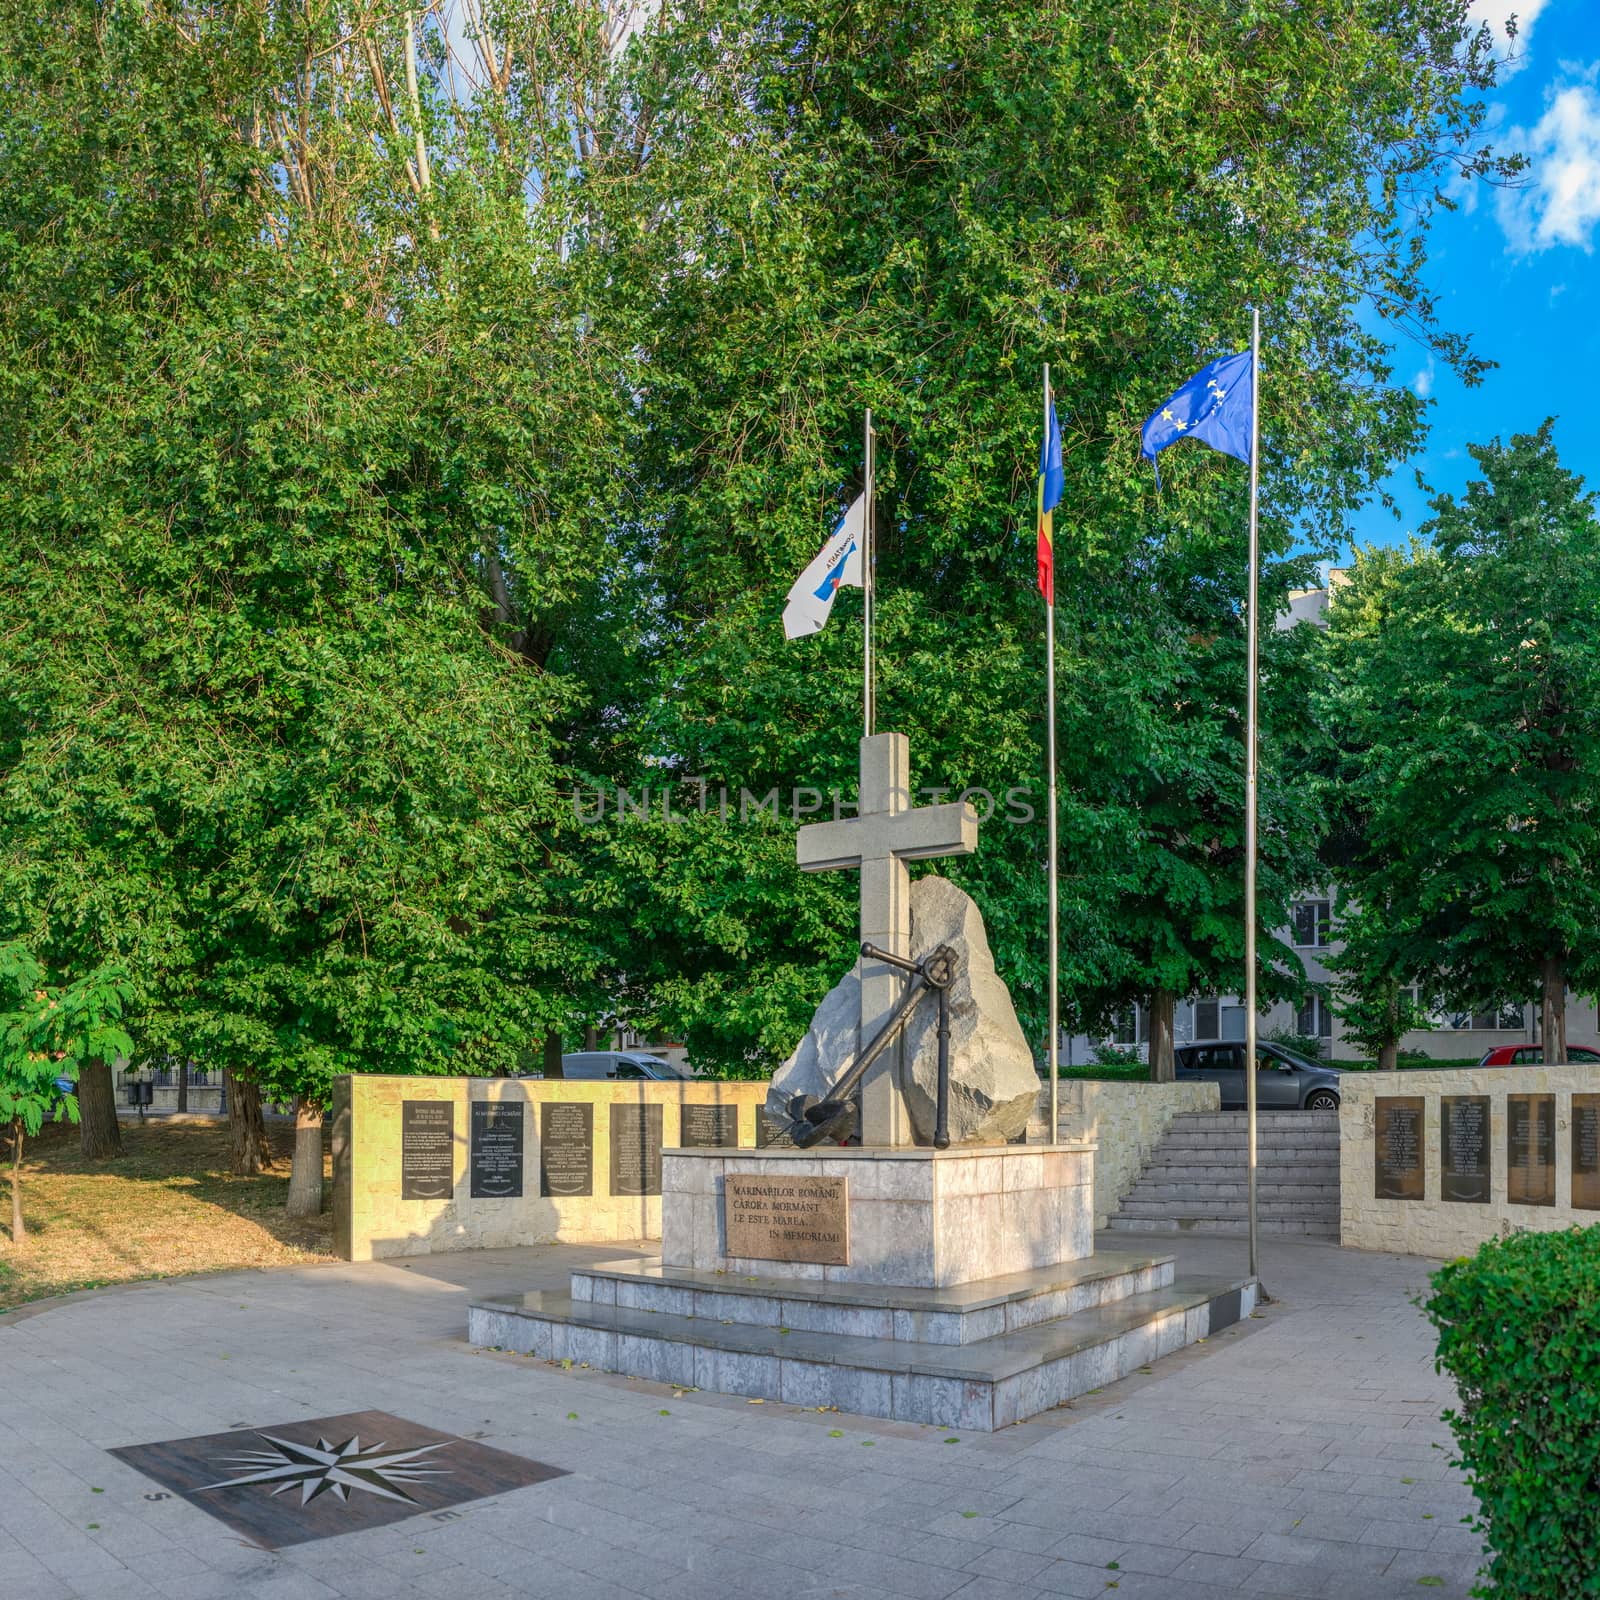 Romanian Mariners monument in Constanta, Romania by Multipedia